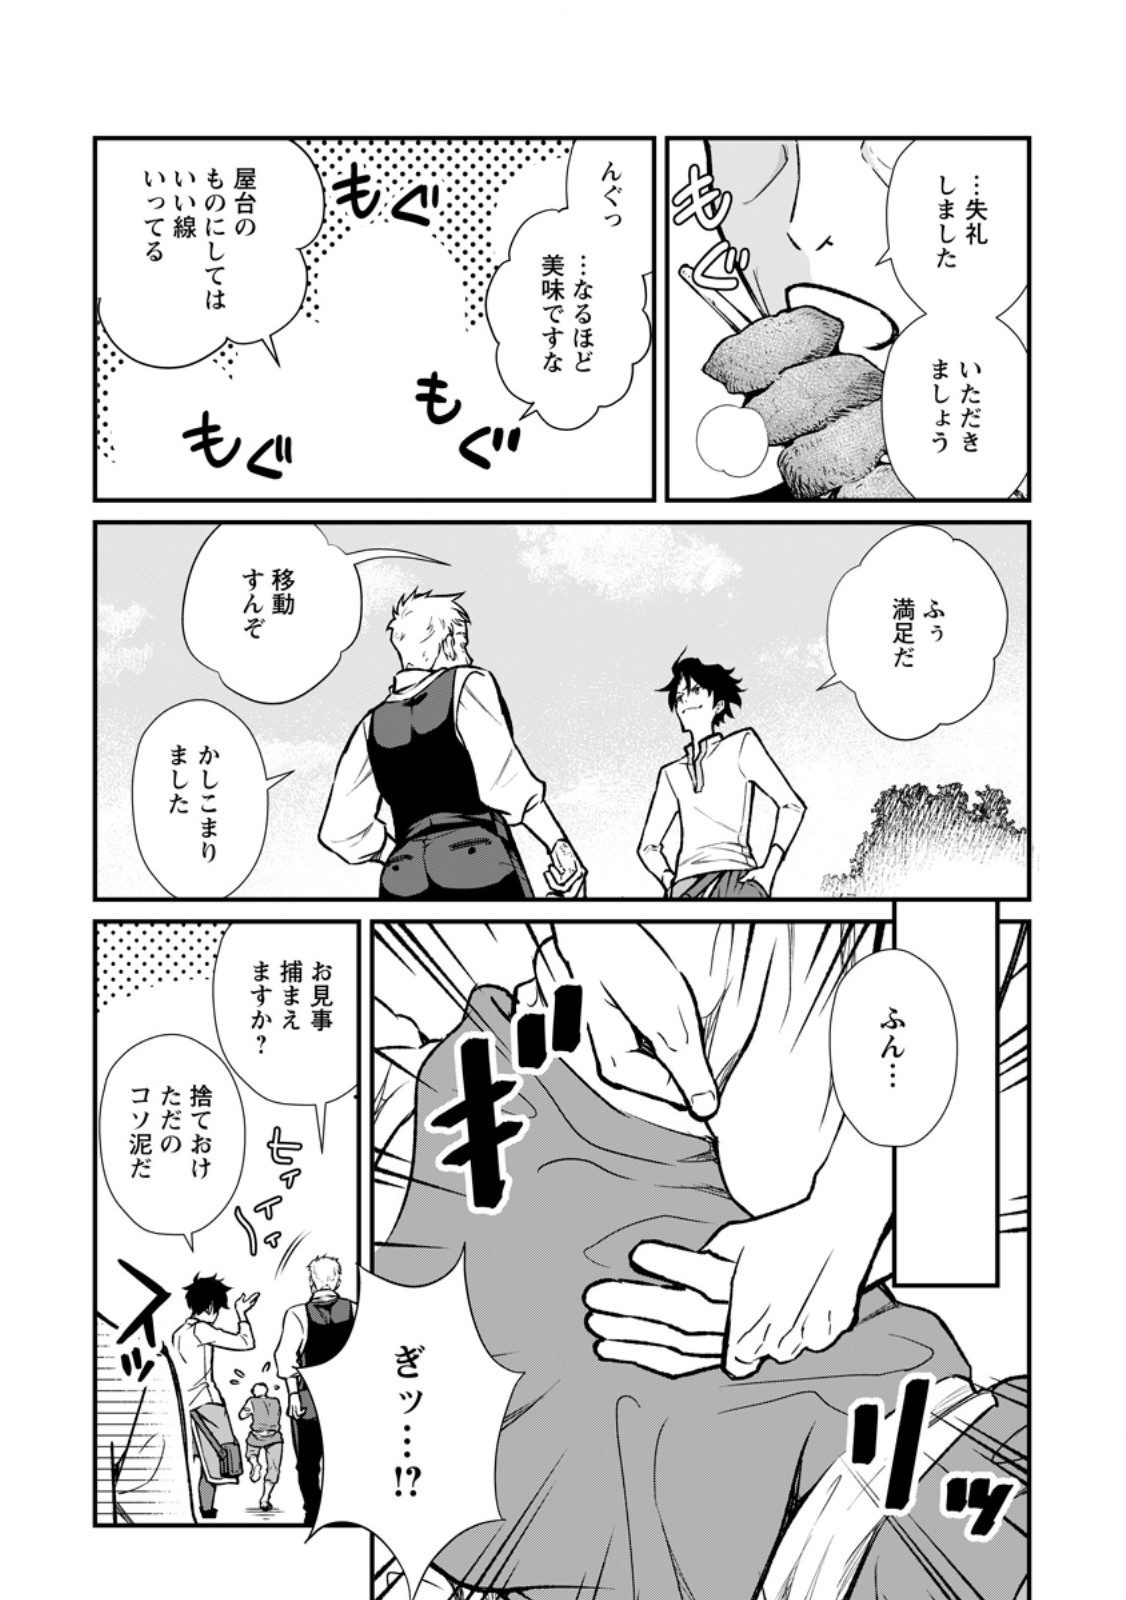 Taida no Ouji wa Sokoku wo Suteru - Chapter 10.1 - Page 3